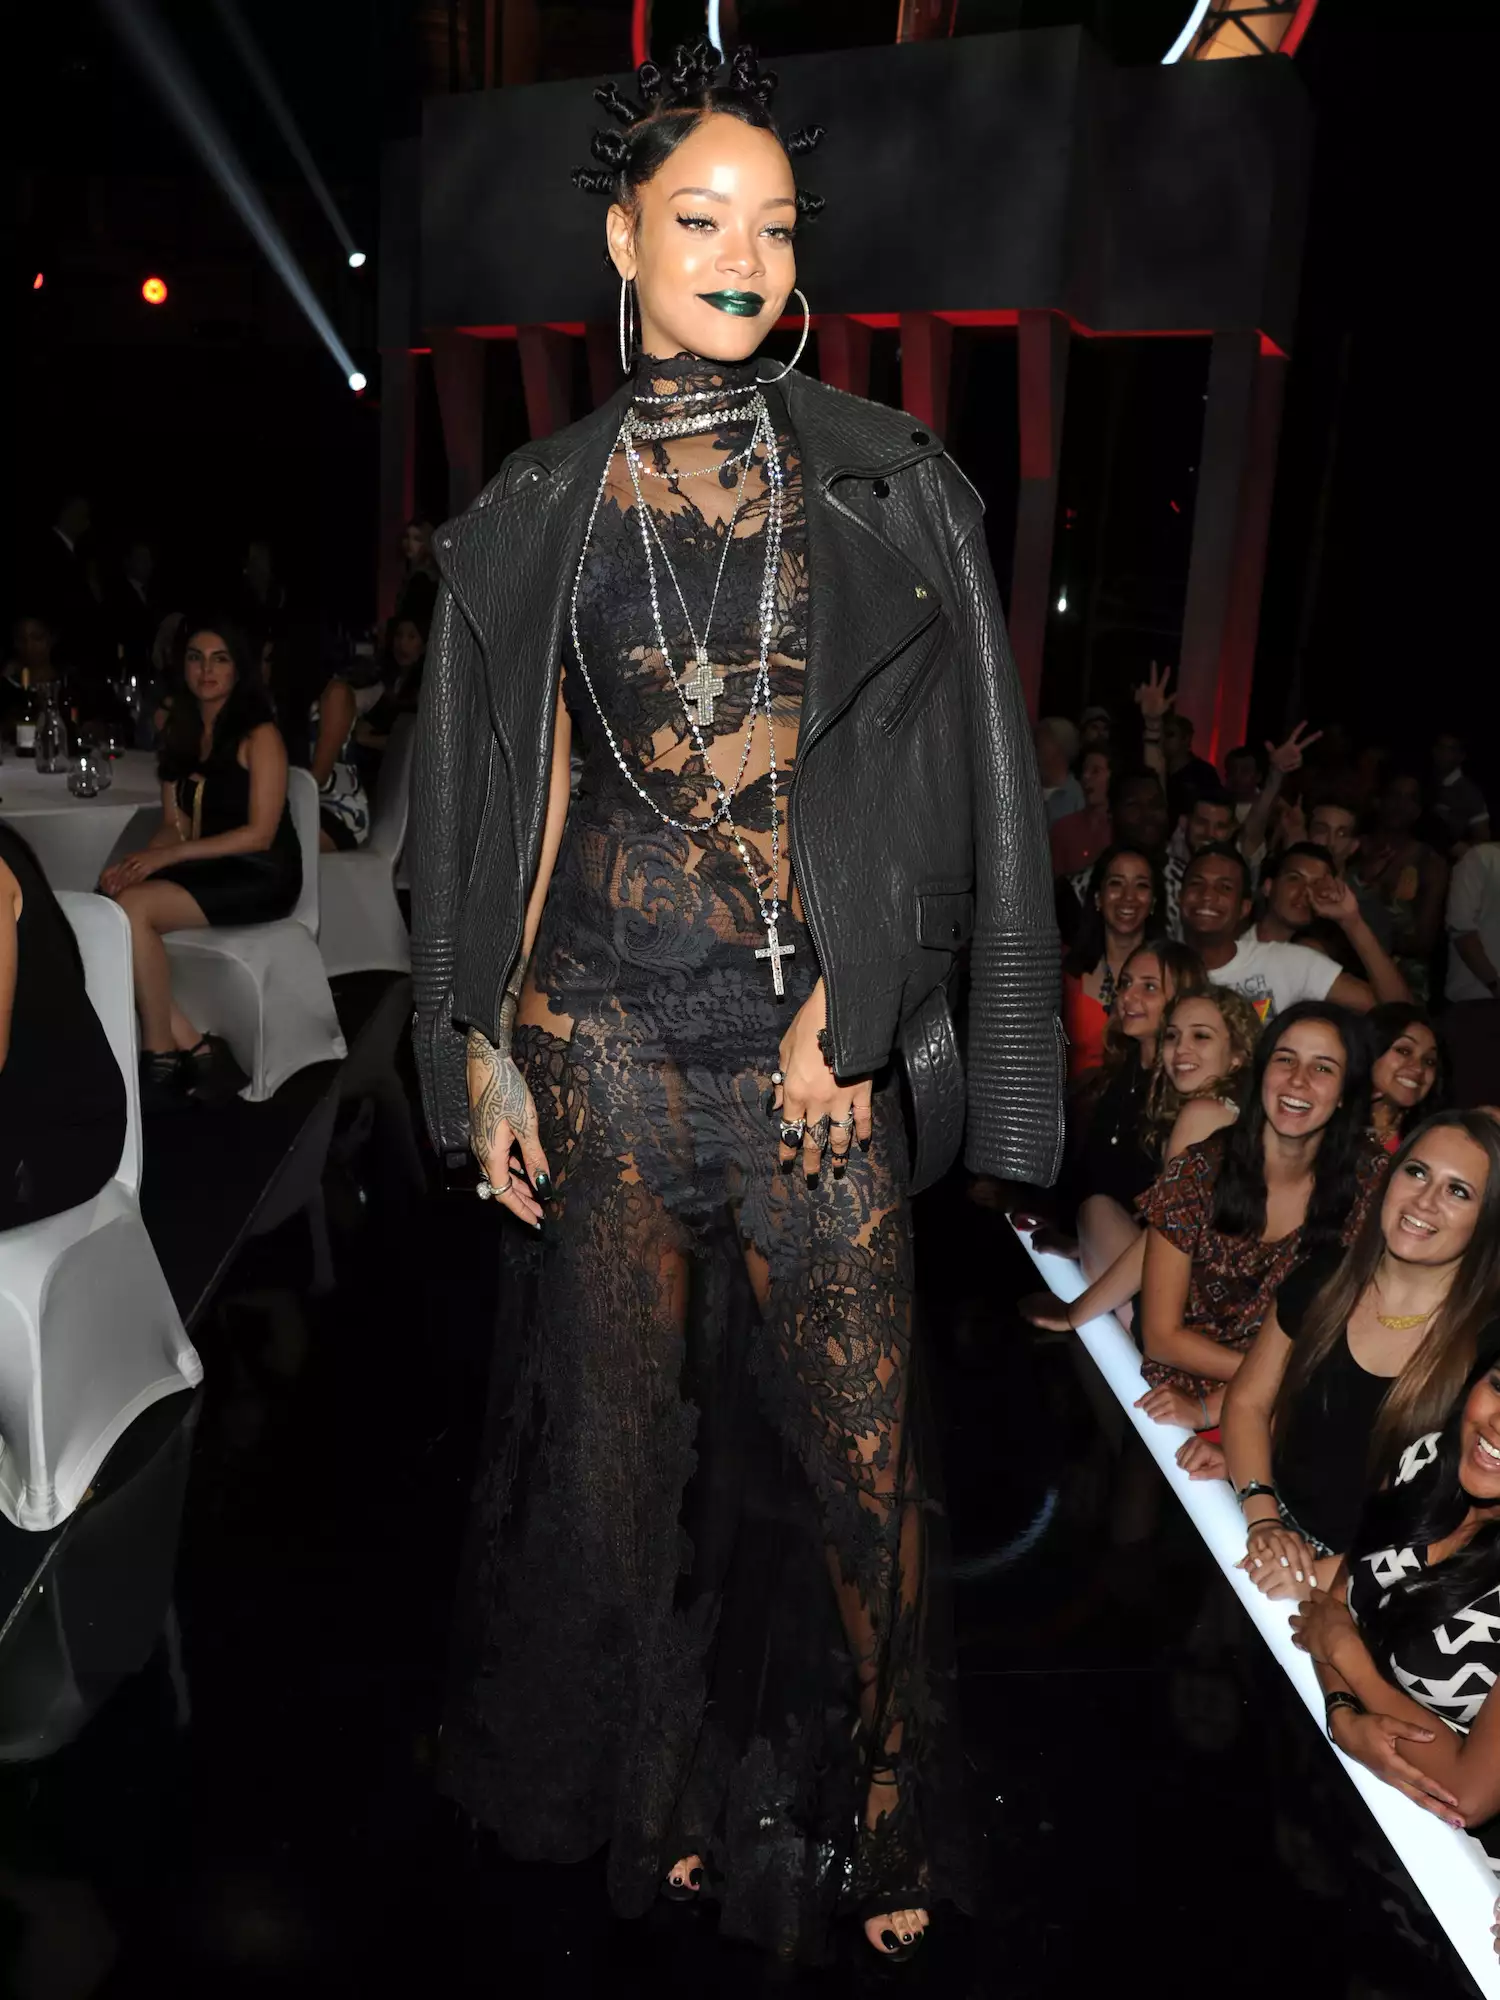 Rihanna wears a black lace dress, leather jacket, layered necklaces, hoop earrings, and bantu knots